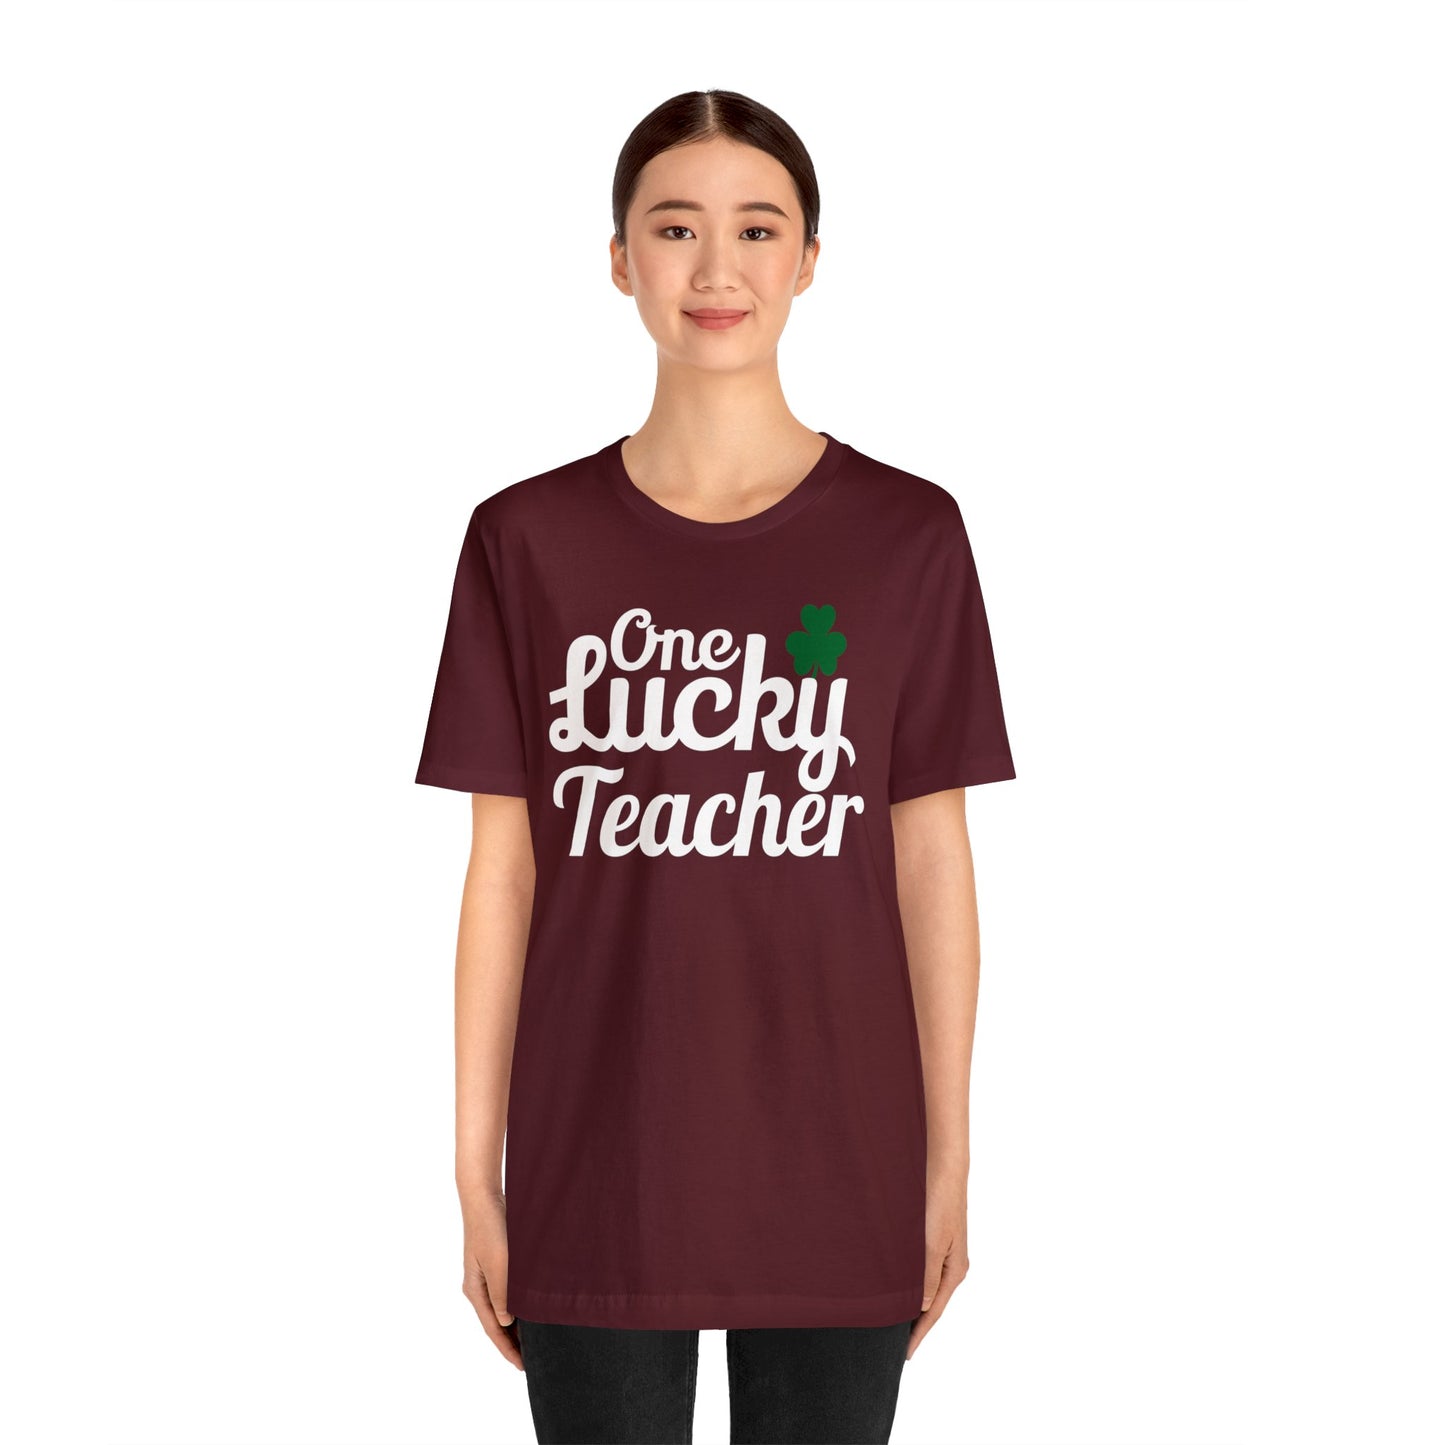 One Lucky Teacher Shirt Feeling Lucky St Patrick's Day Shirt St Paddy's Day